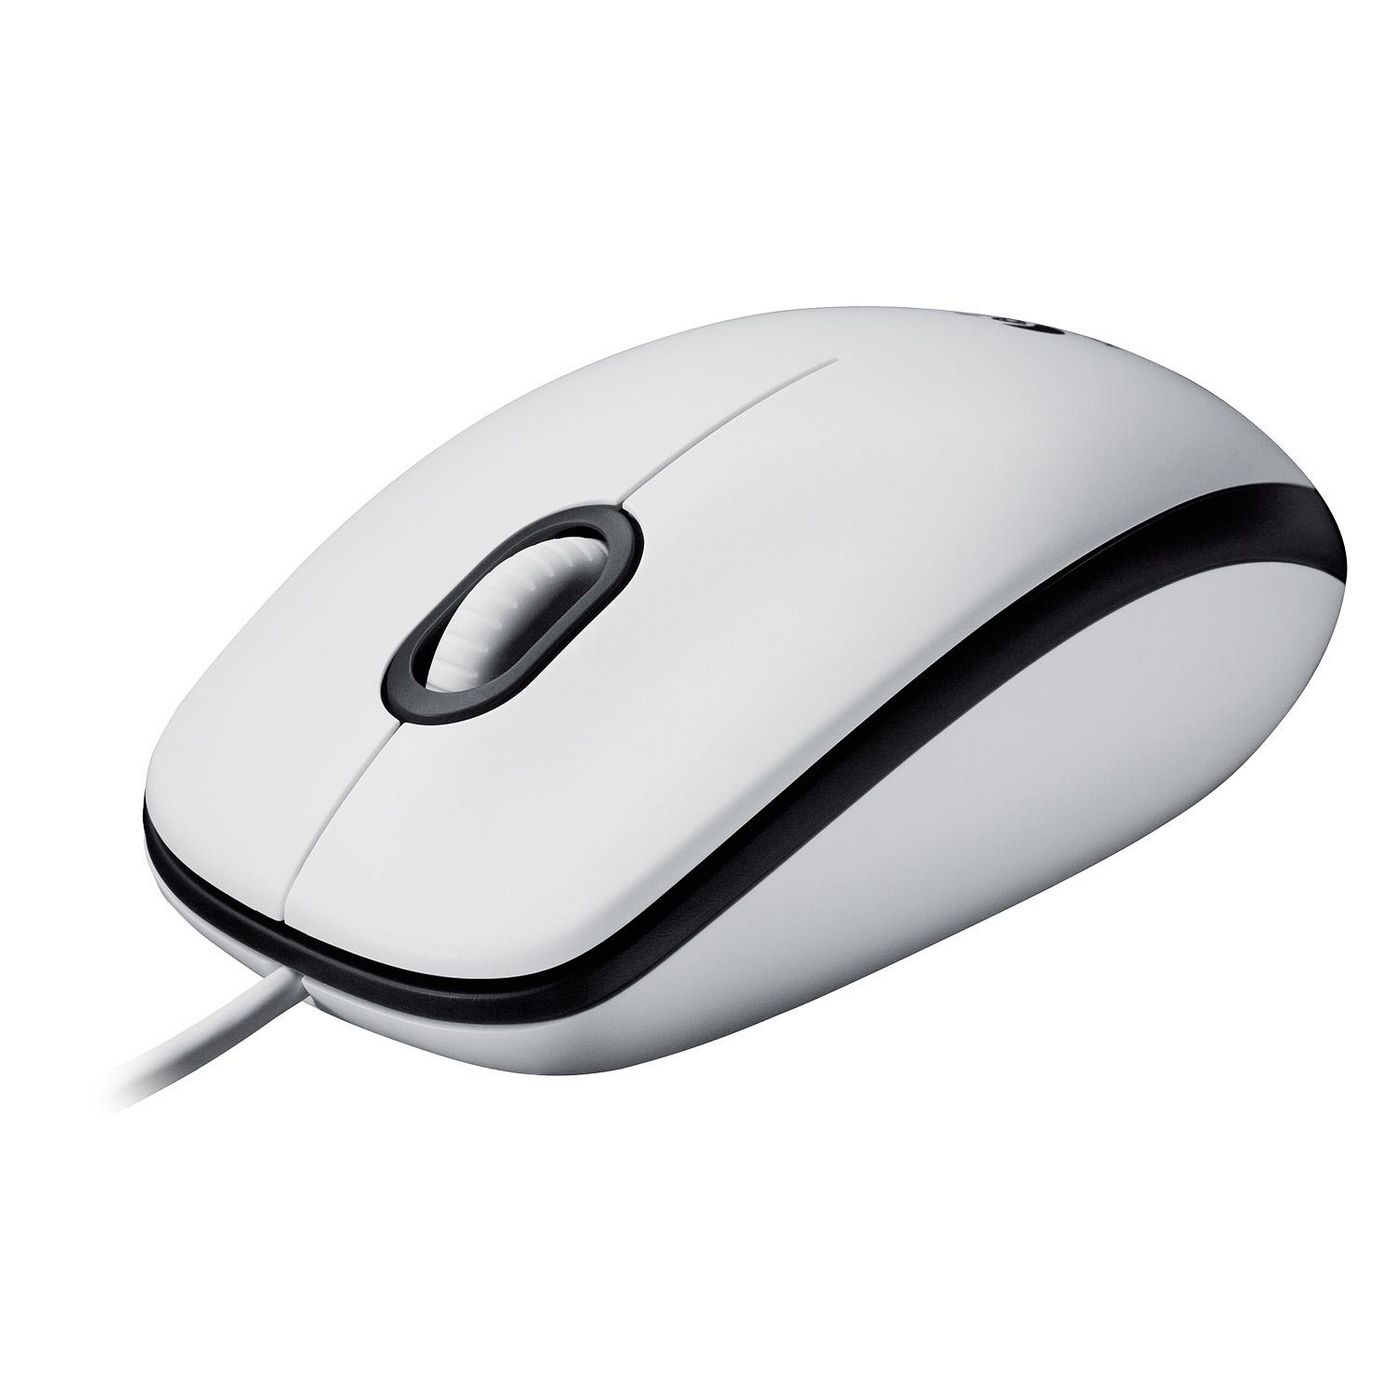 Logitech 910-005004 M100, Corded mouse, White 